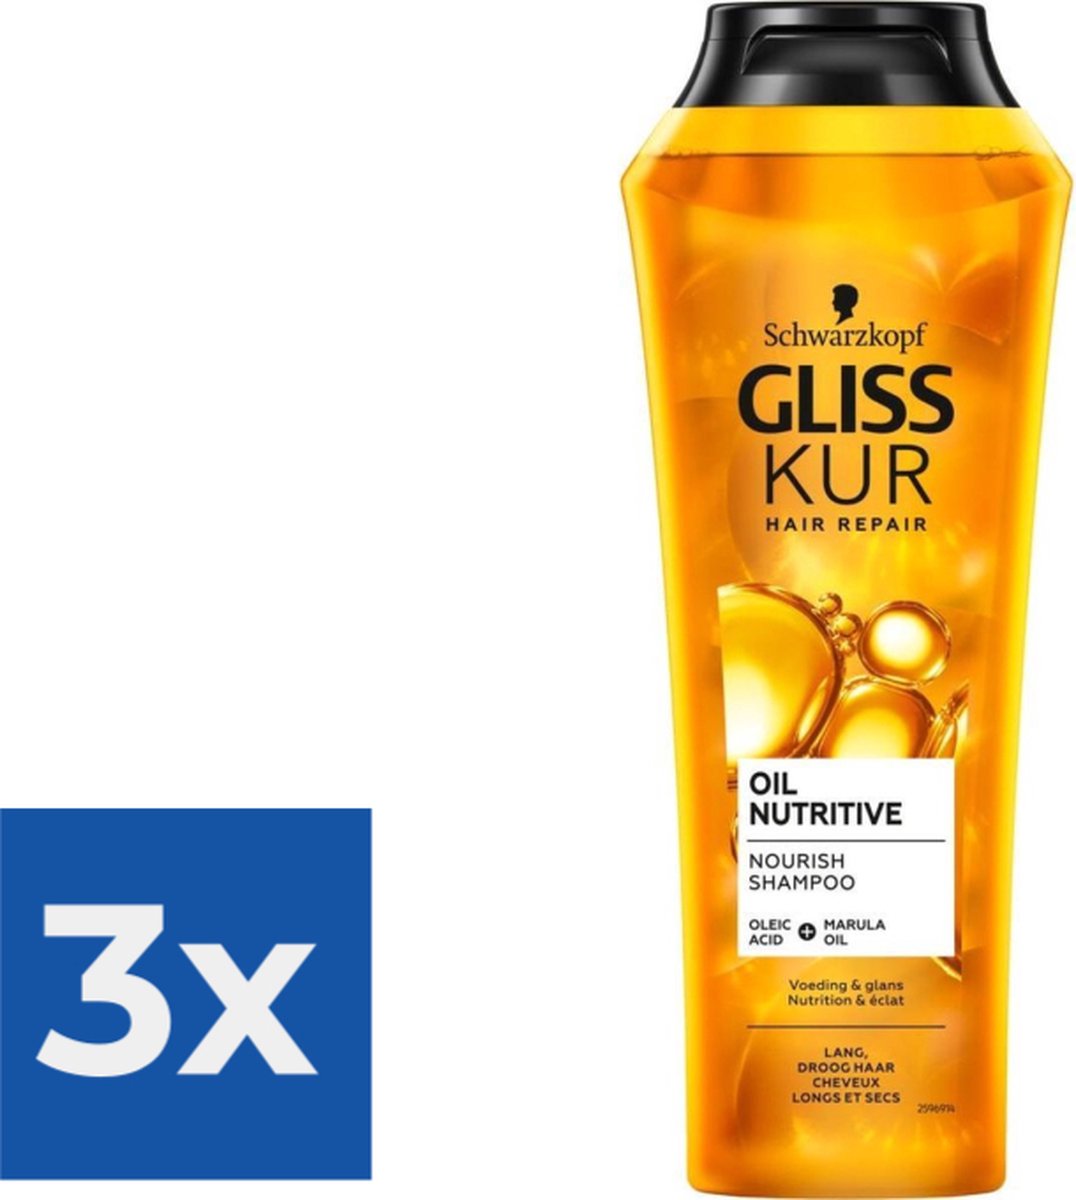 Gliss Kur Shampoo Oil Nutritive 250 ml - Voordeelverpakking 3 stuks